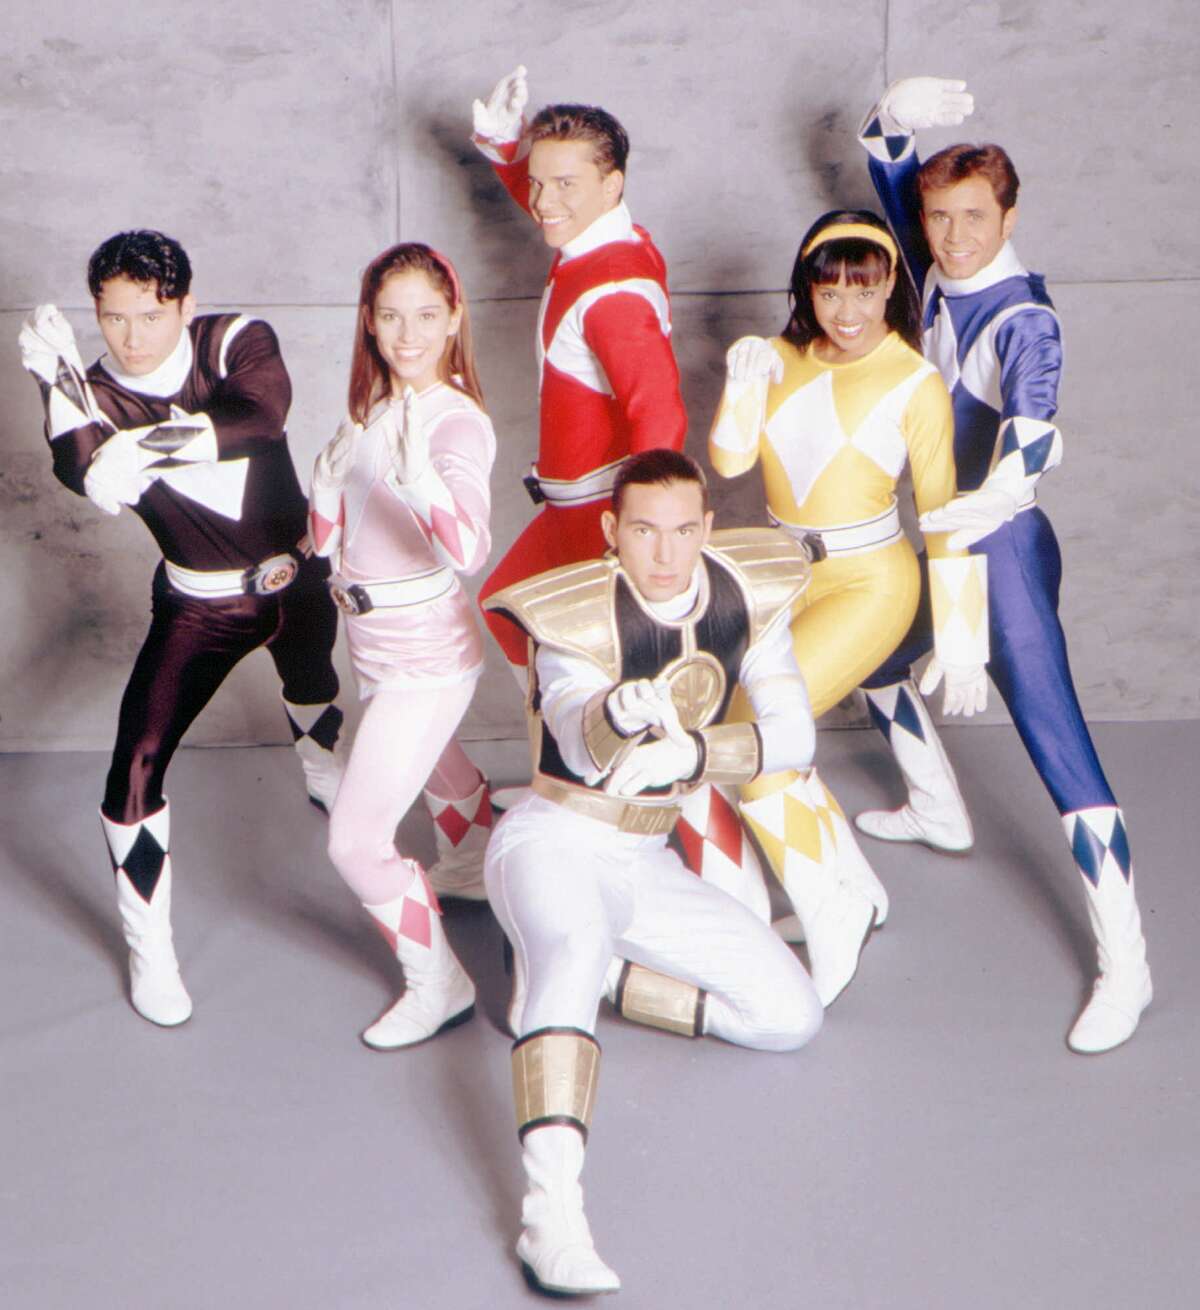 The 'Mighty Morphin Power Rangers' television show featured, left to right, Johnny Yong Bosch (Black Ranger), Amy Jo Johnson (Pink Ranger), Steve Cardenas (Red Ranger), Jason Frank (White Ranger), Karan Ashley (Yellow Ranger) and David Yost (Blue Ranger).